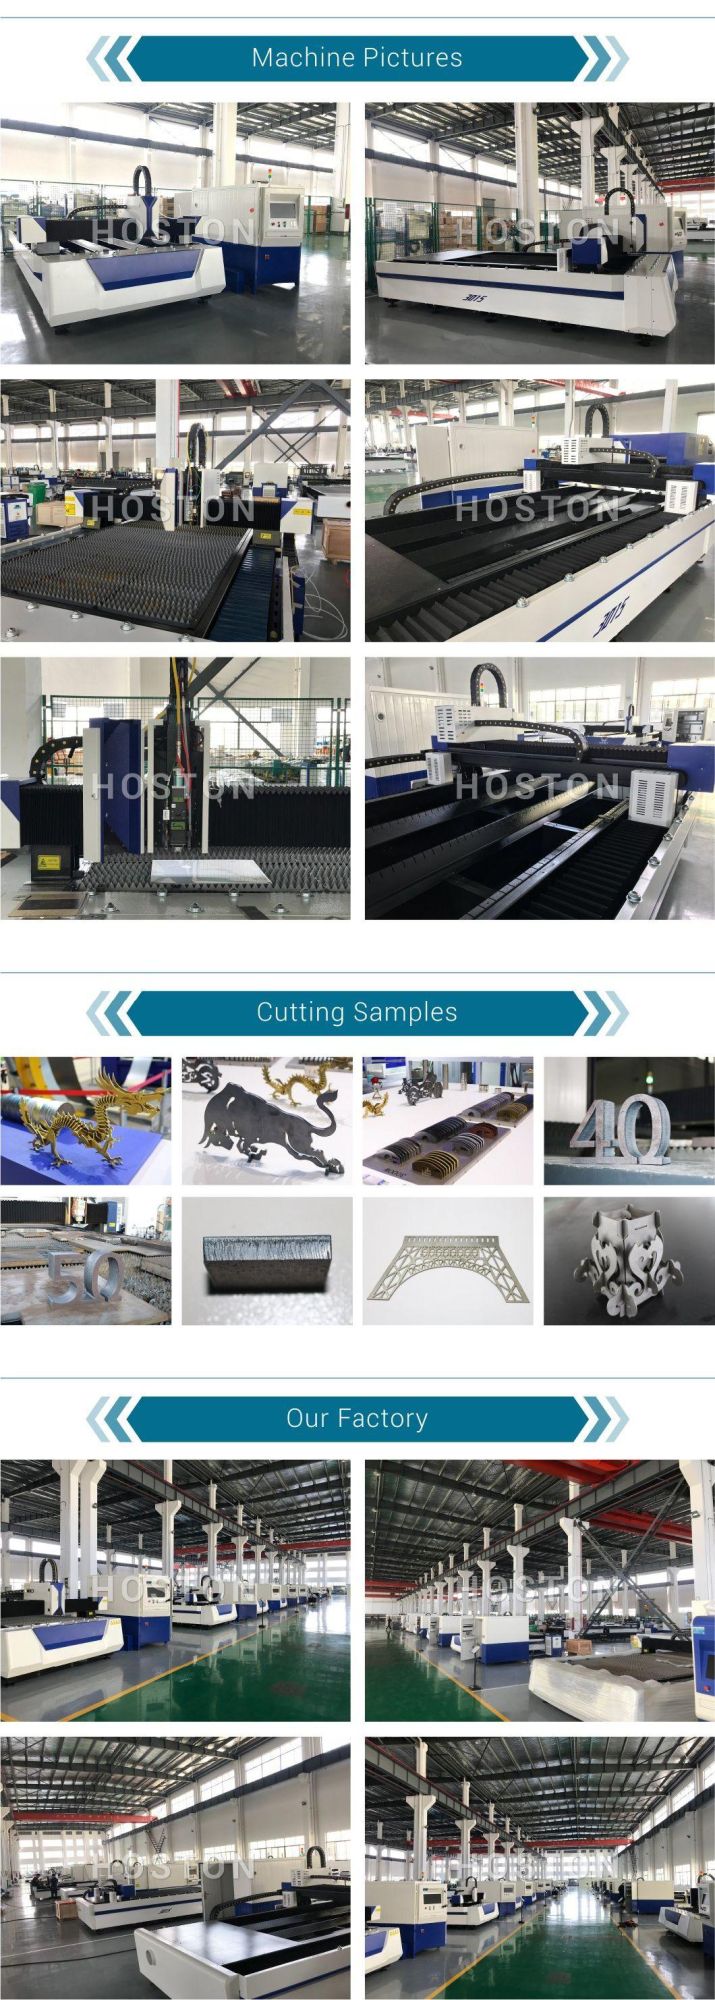 China Manufacturer Fiber Laser Cutting Machine Sheet Metal with Auto Feeding